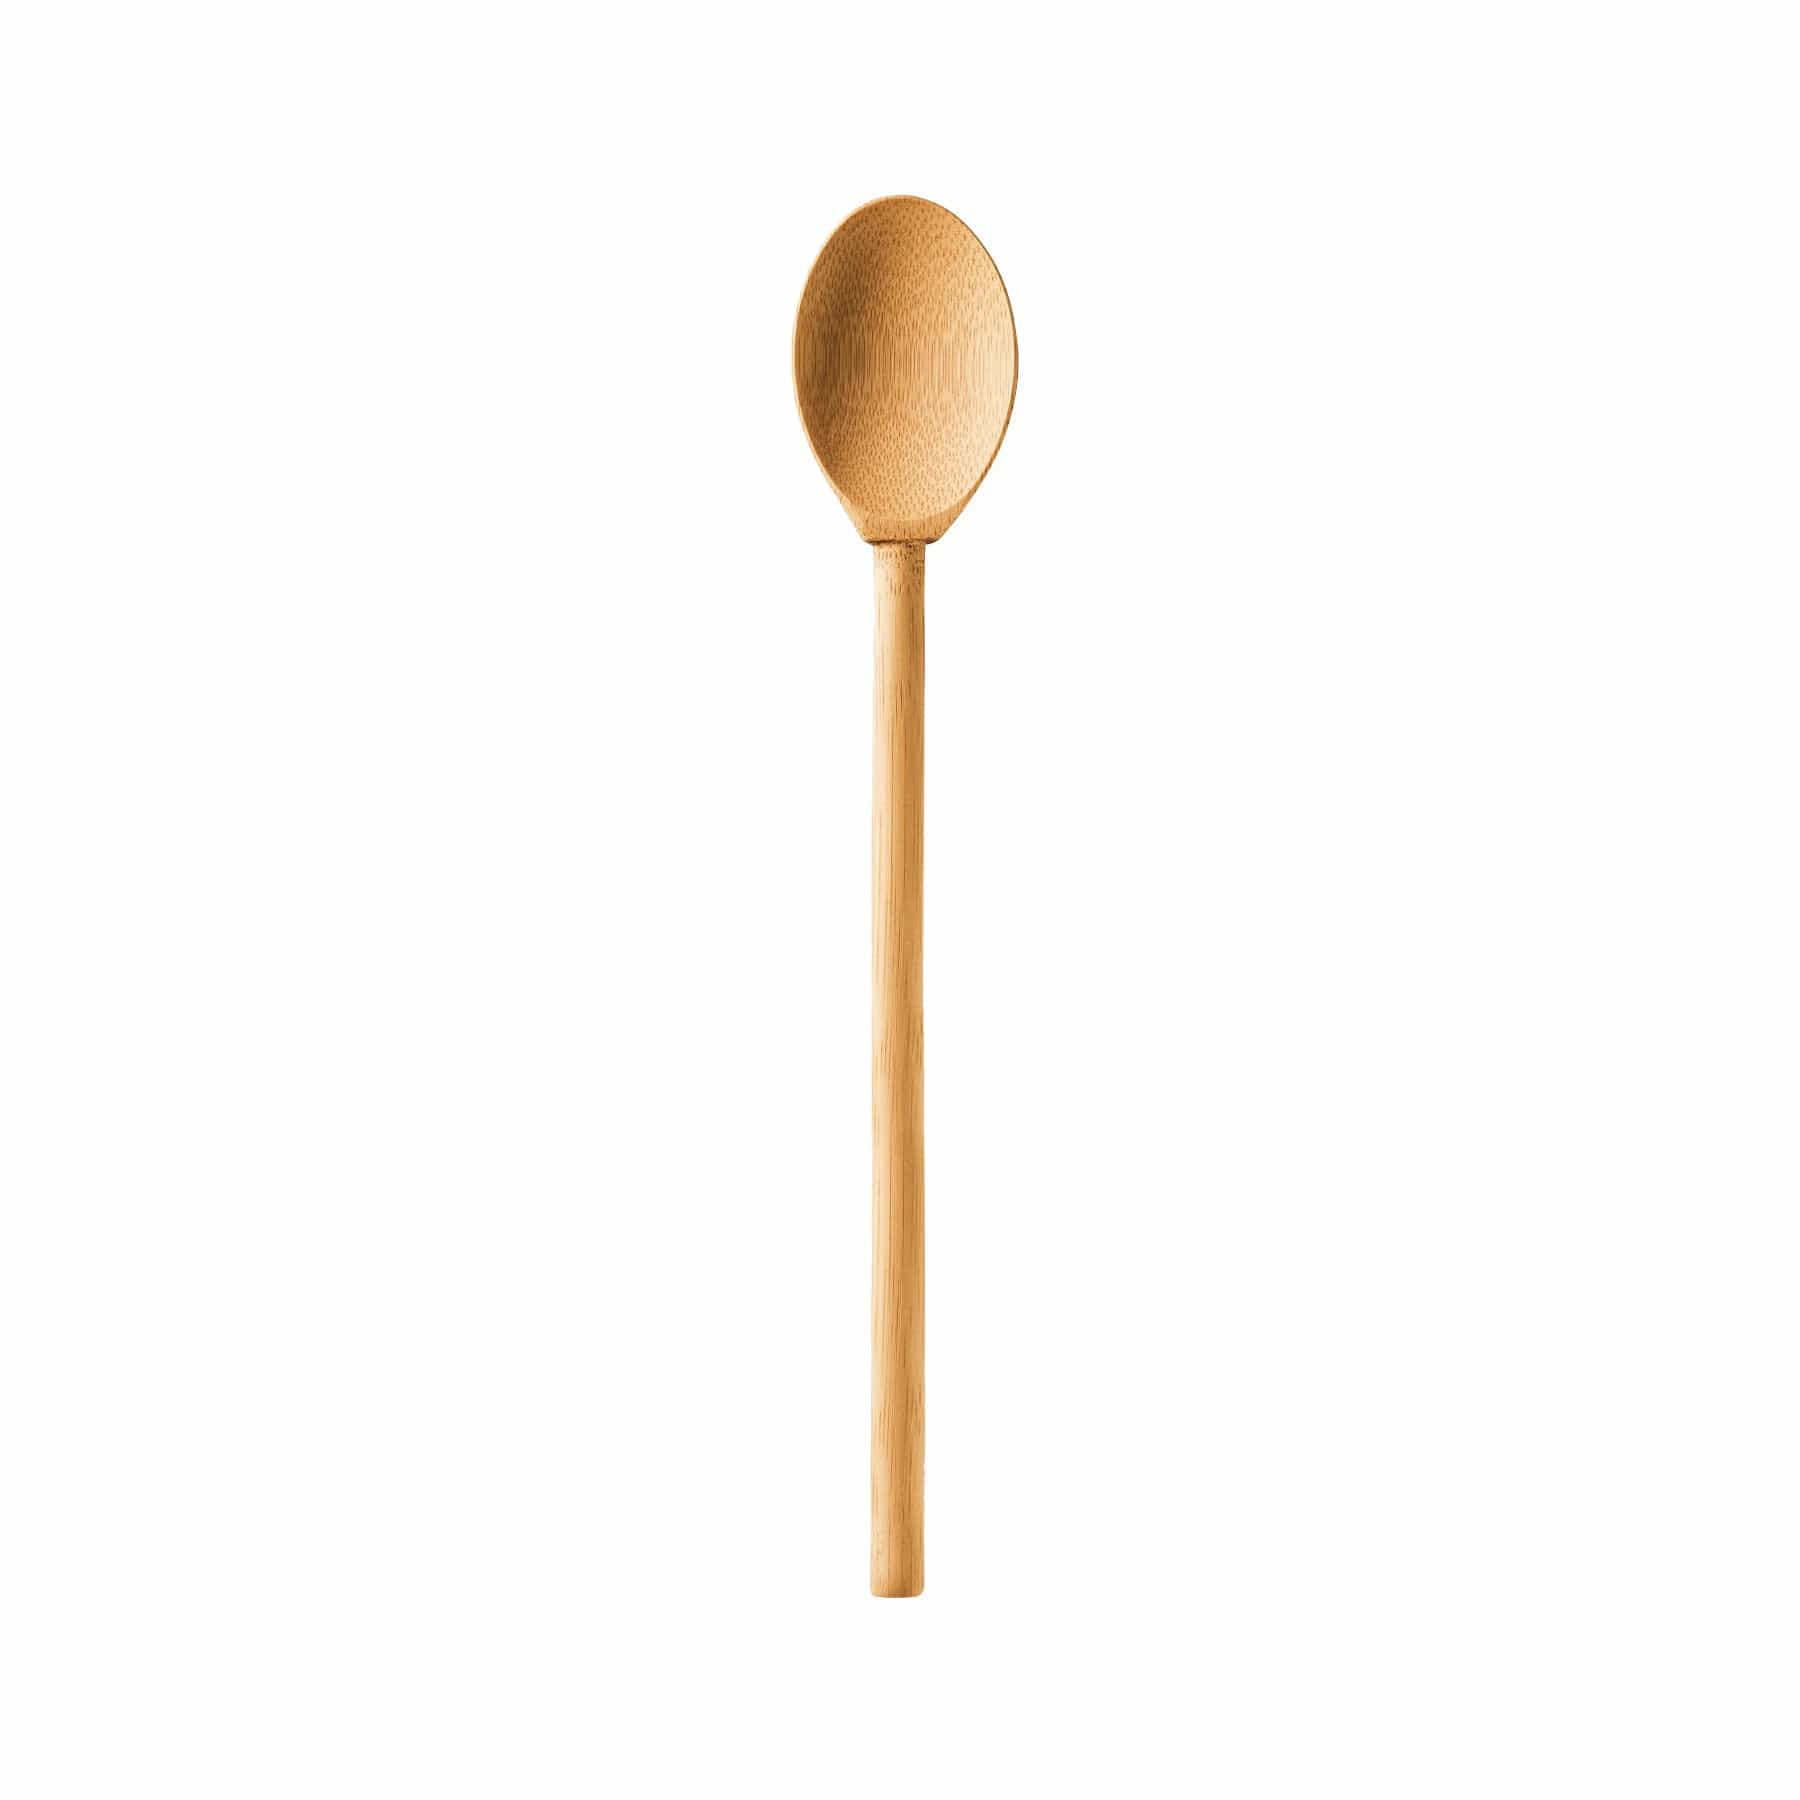 Bamboo mixing spoon